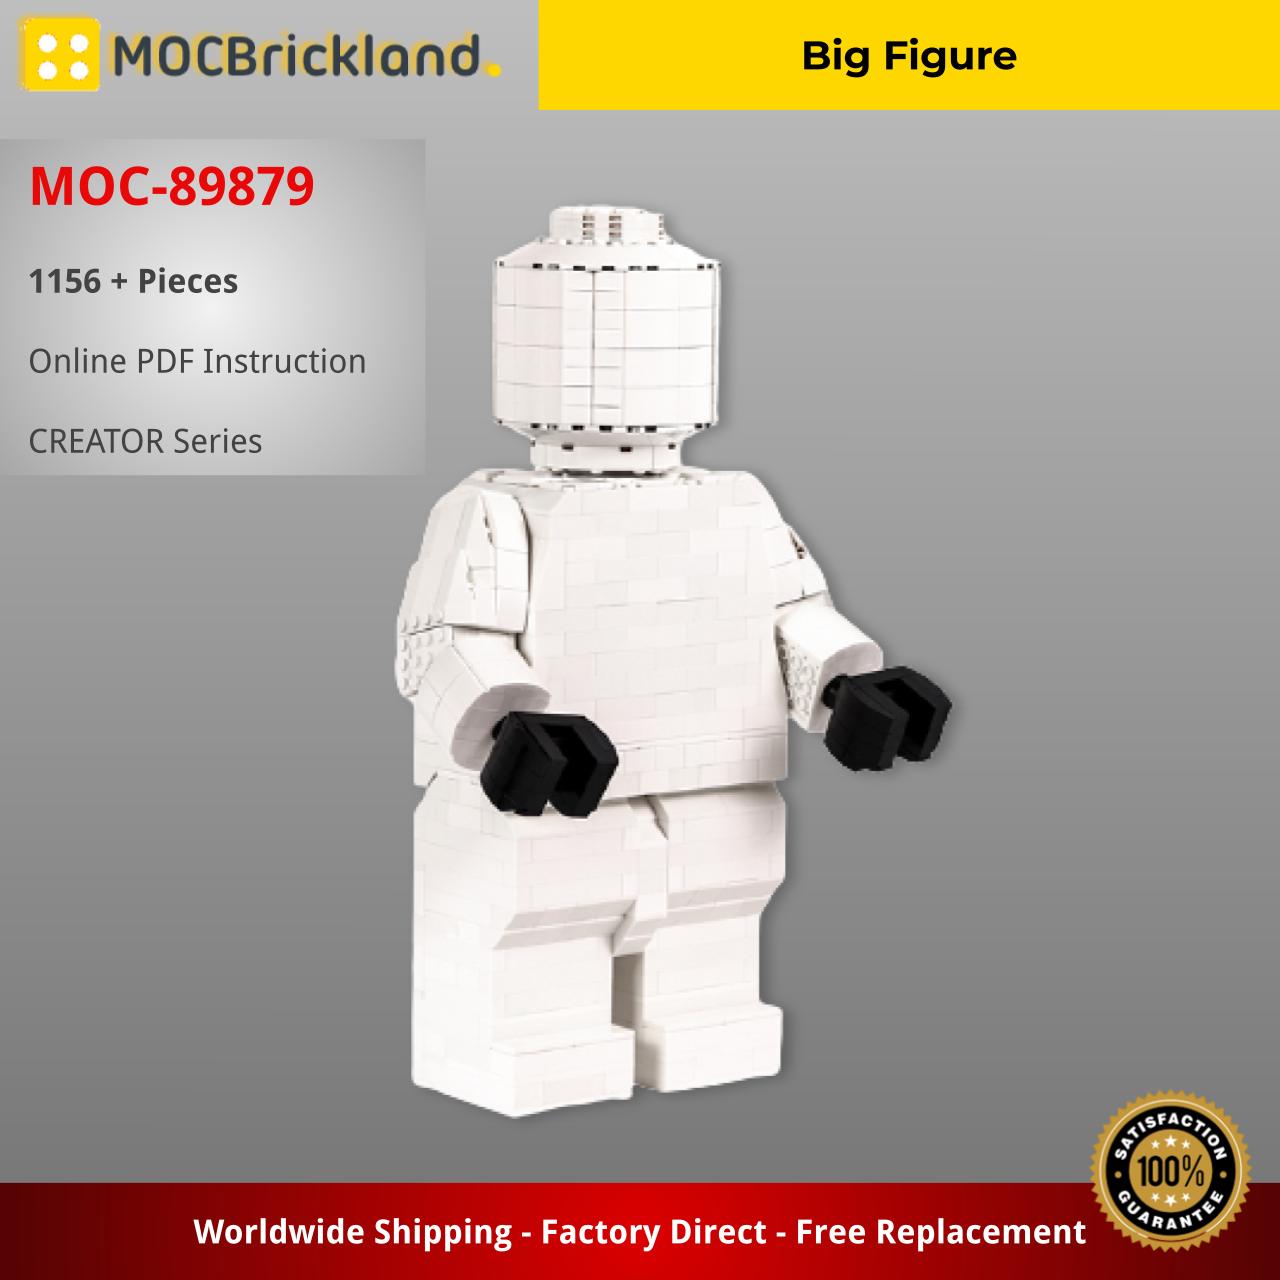 creator moc 89879 big figure mocbrickland 3842